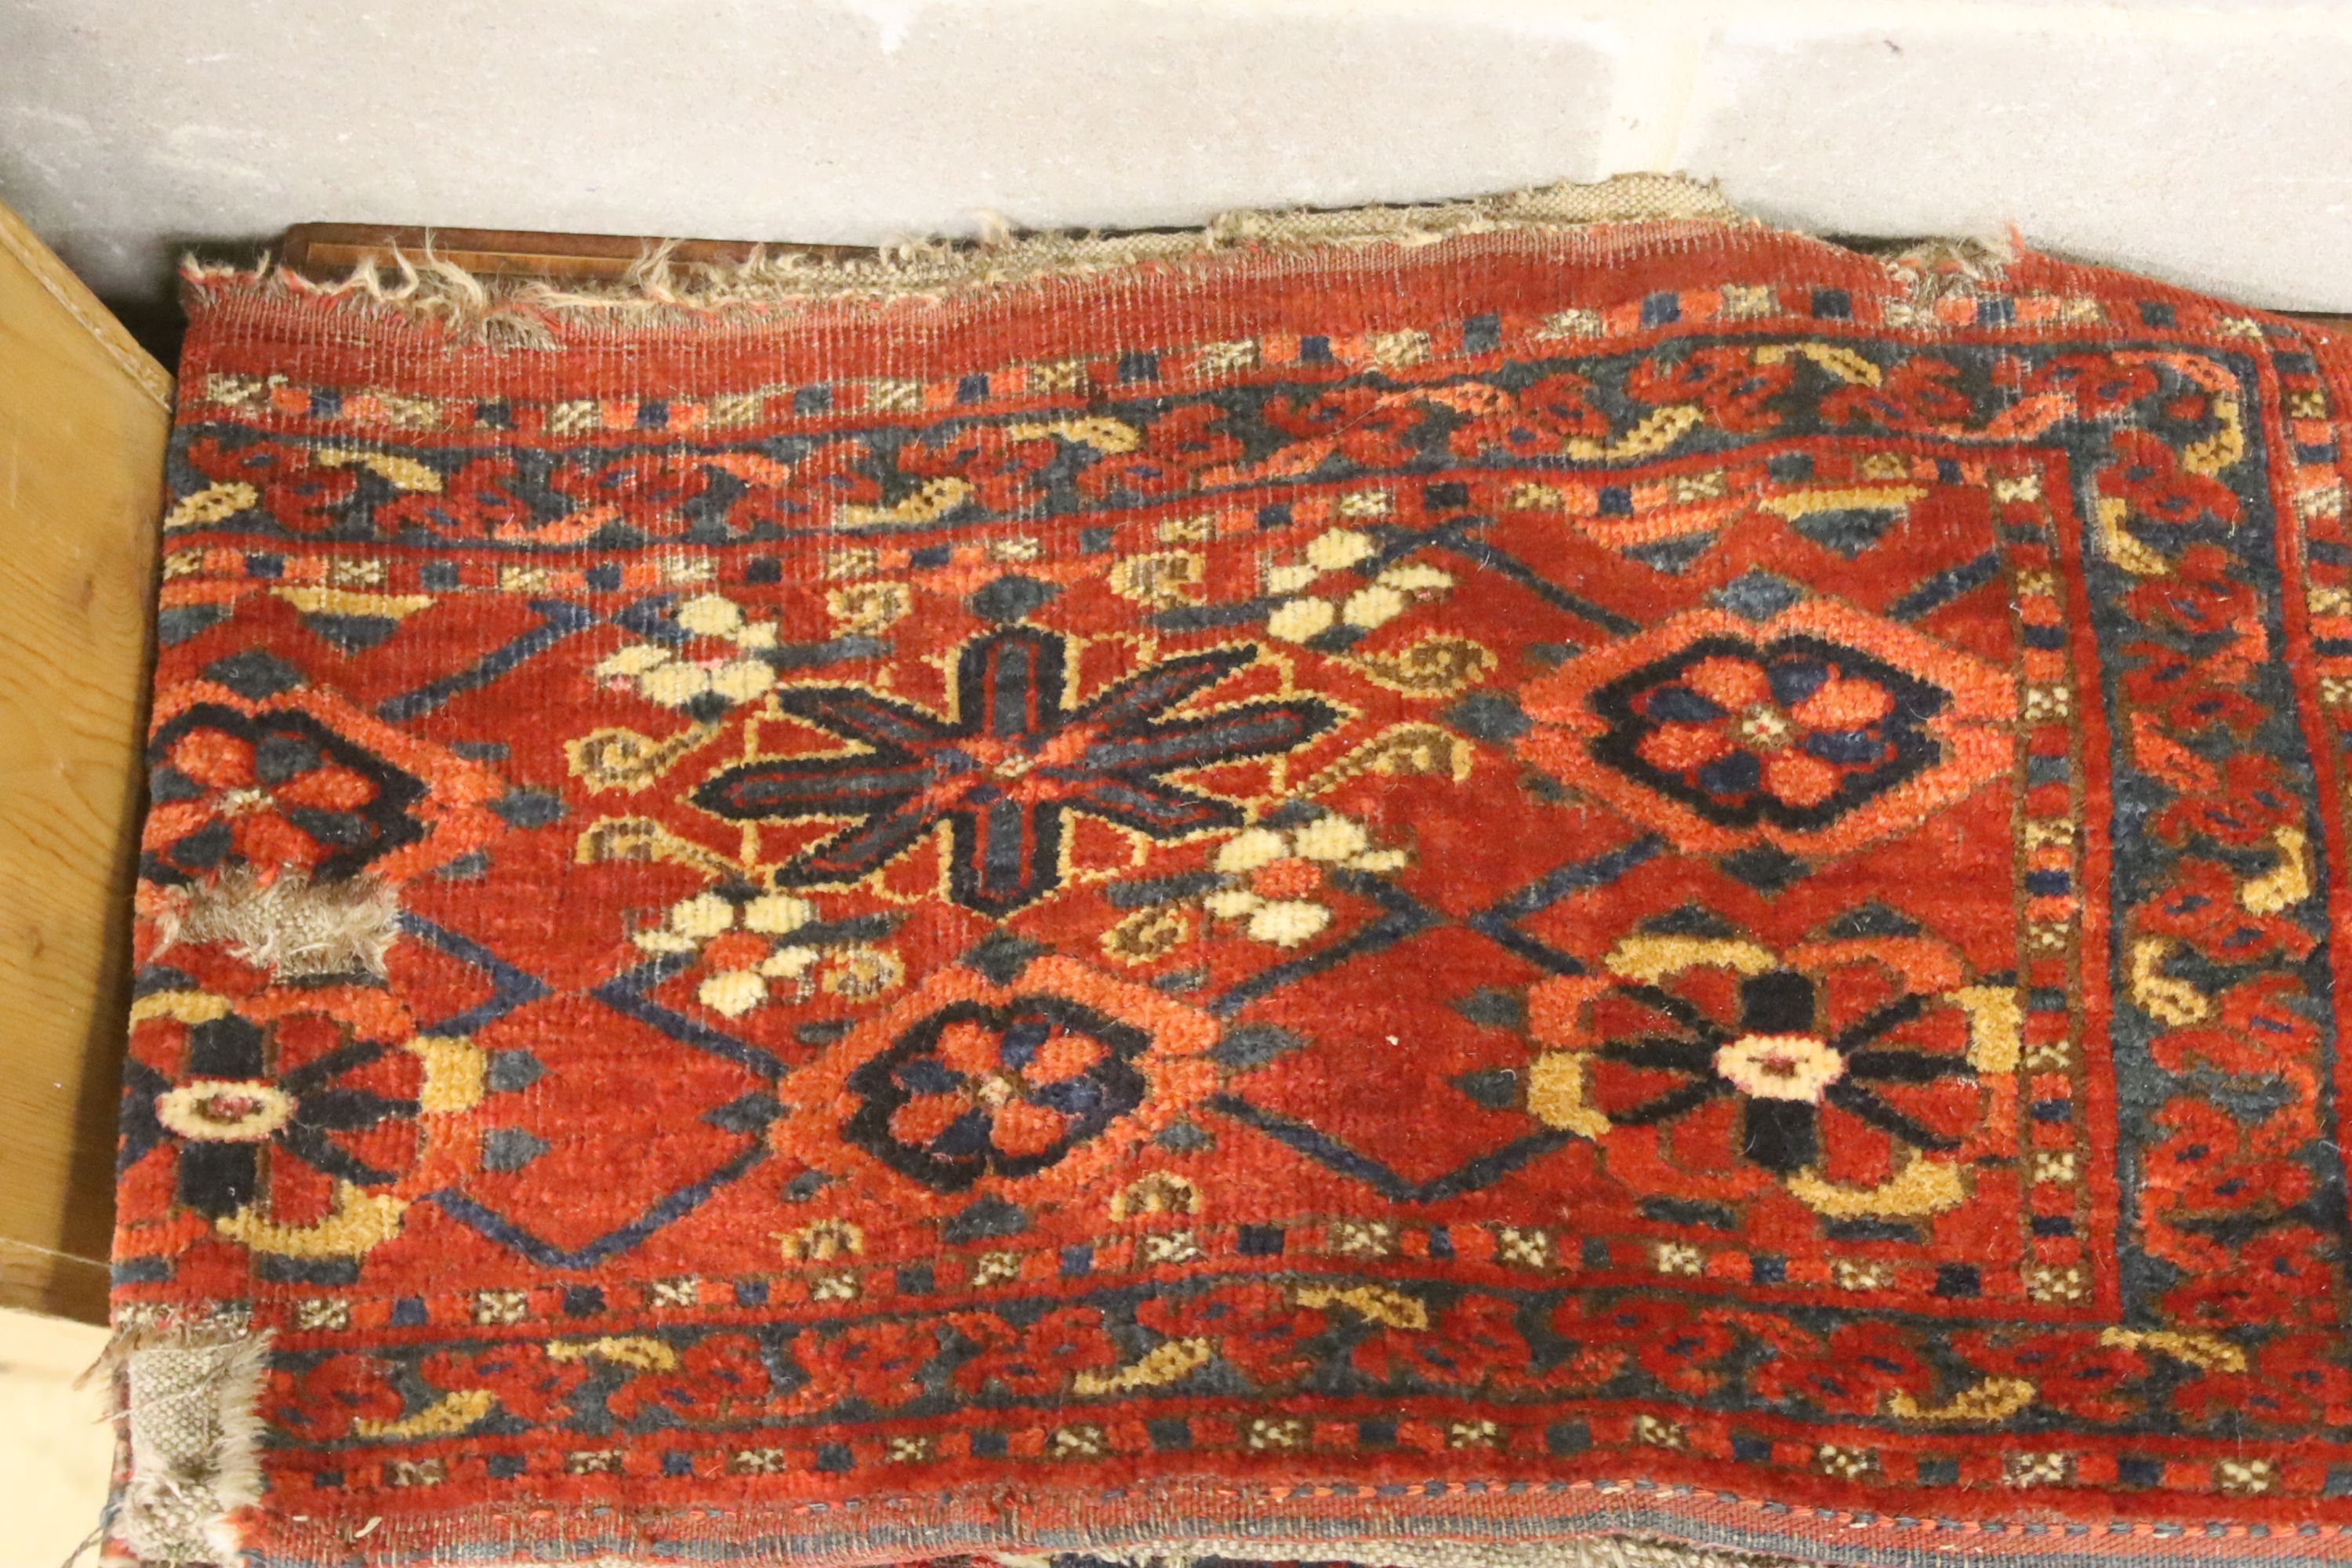 Ten items - Middle Eastern textiles, carpet bags